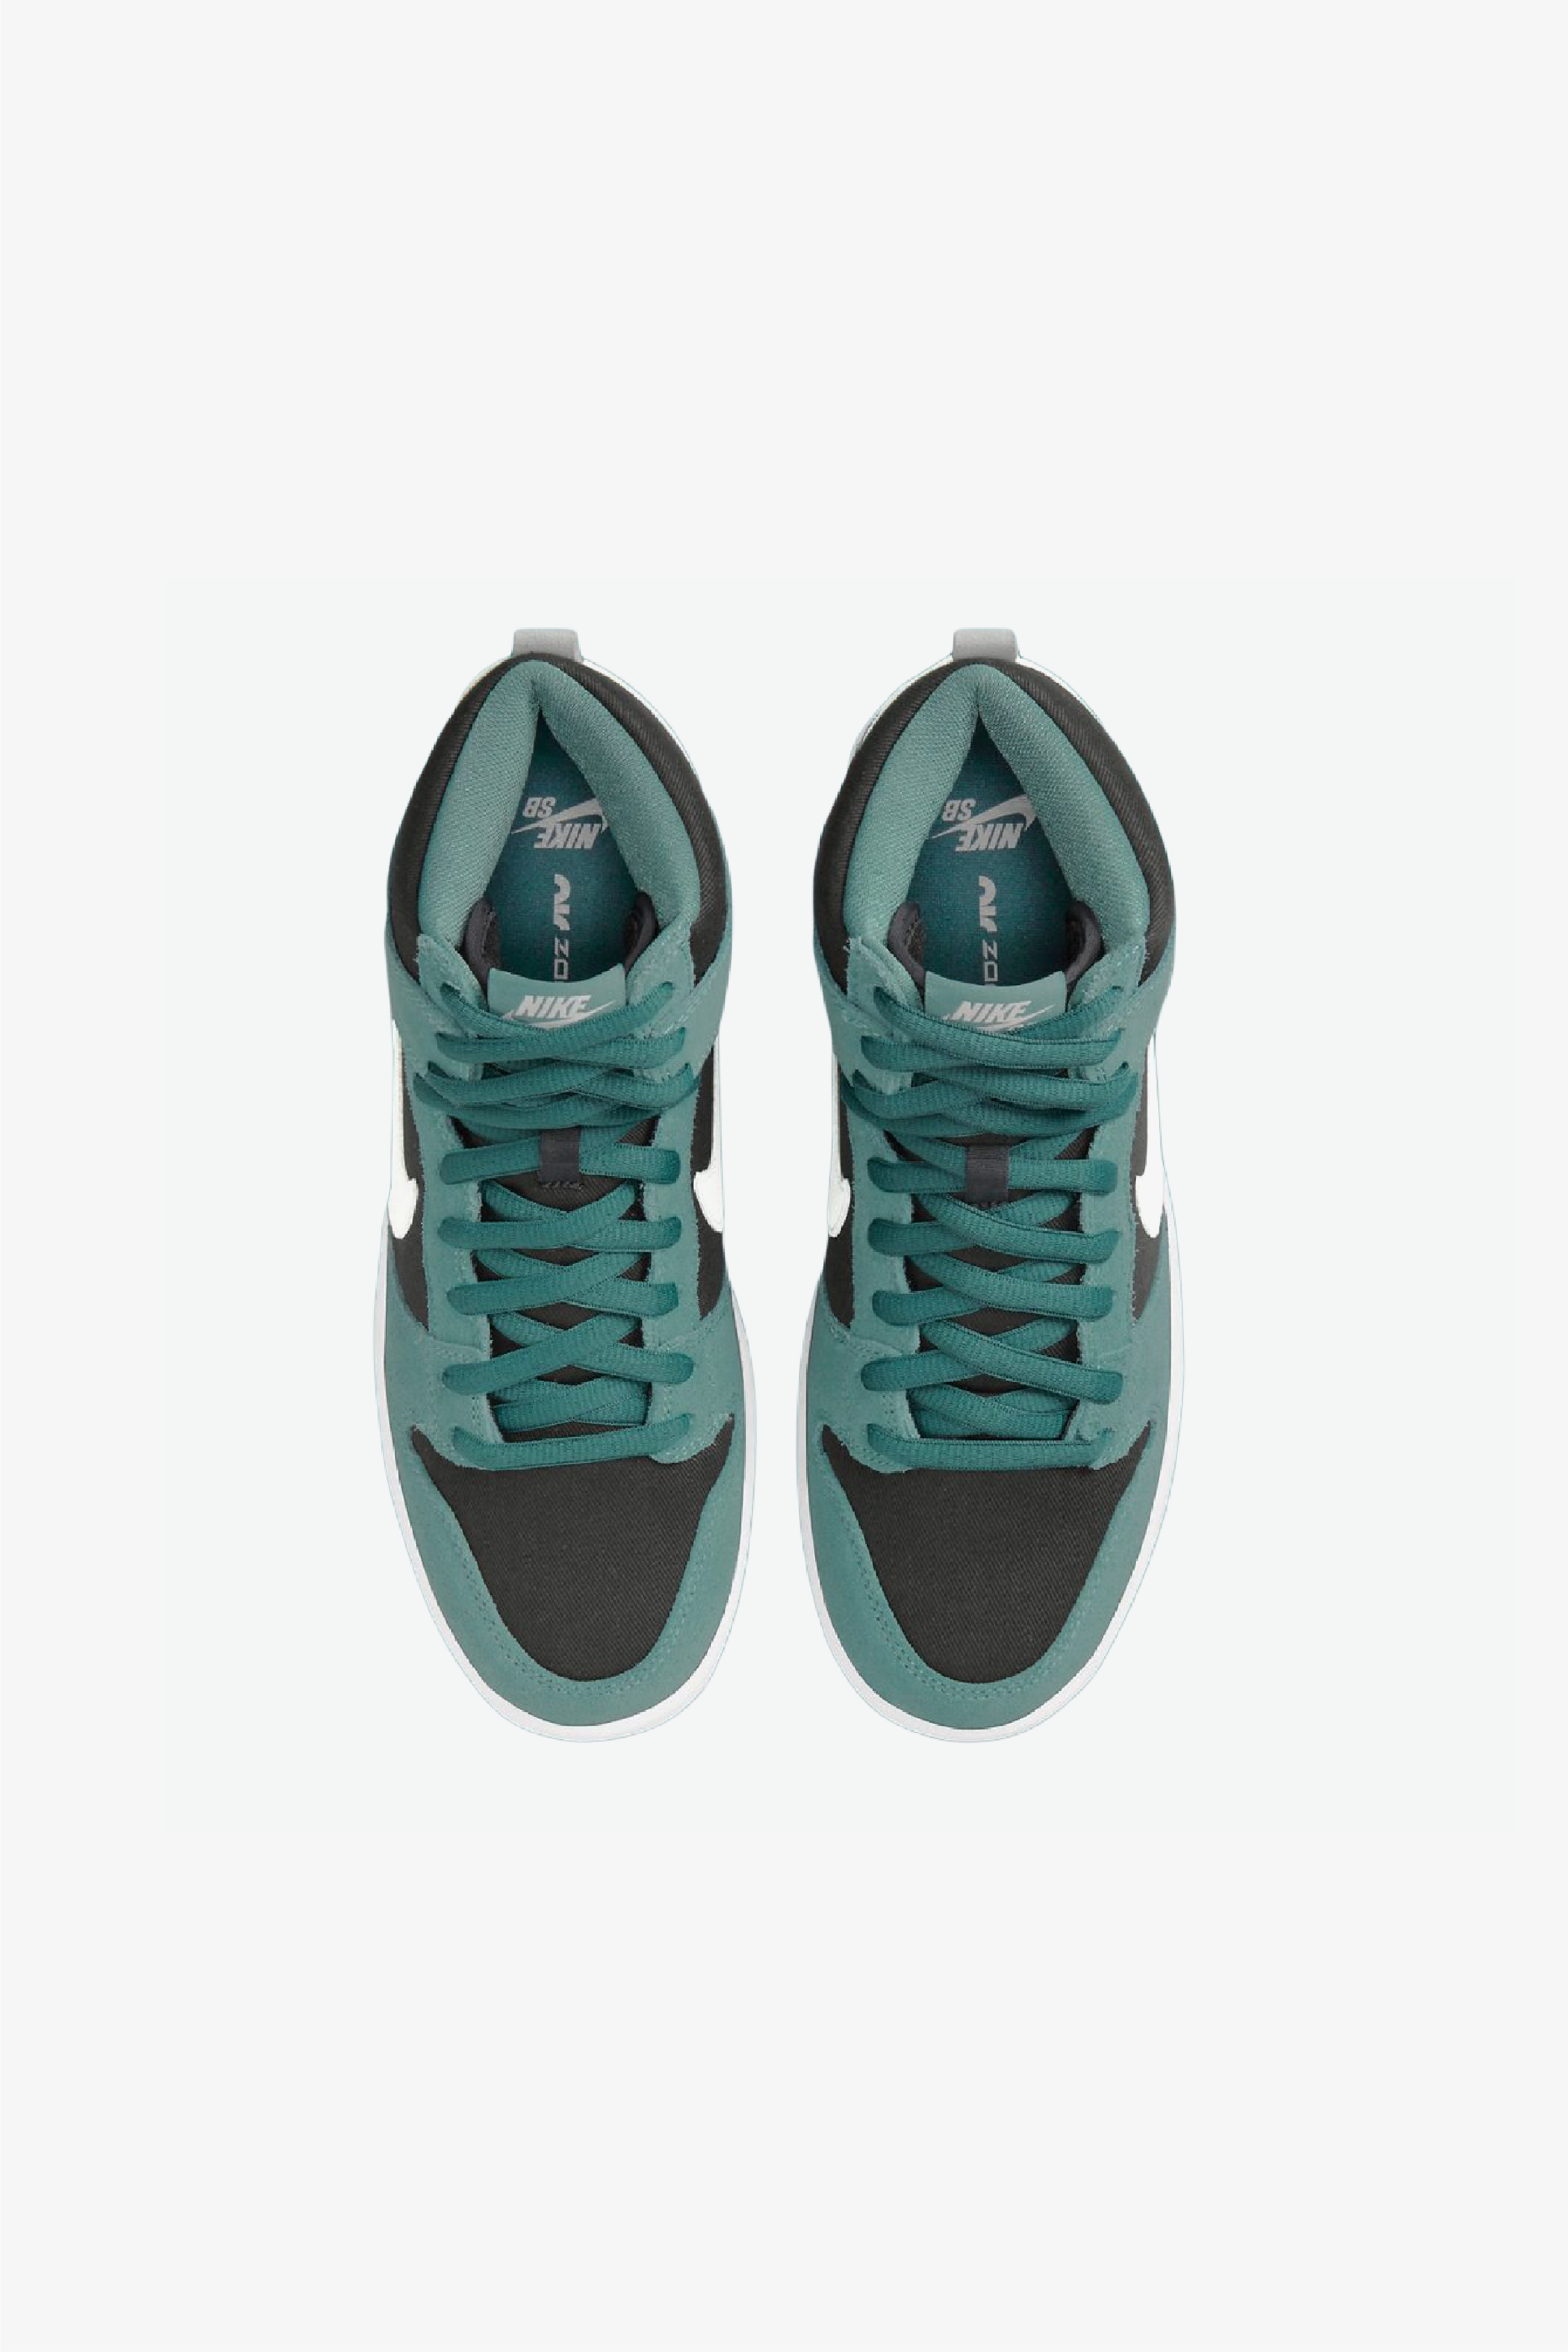 Selectshop FRAME - NIKE SB Nike SB Dunk High Pro "Mineral Slate Suede" Footwear Dubai